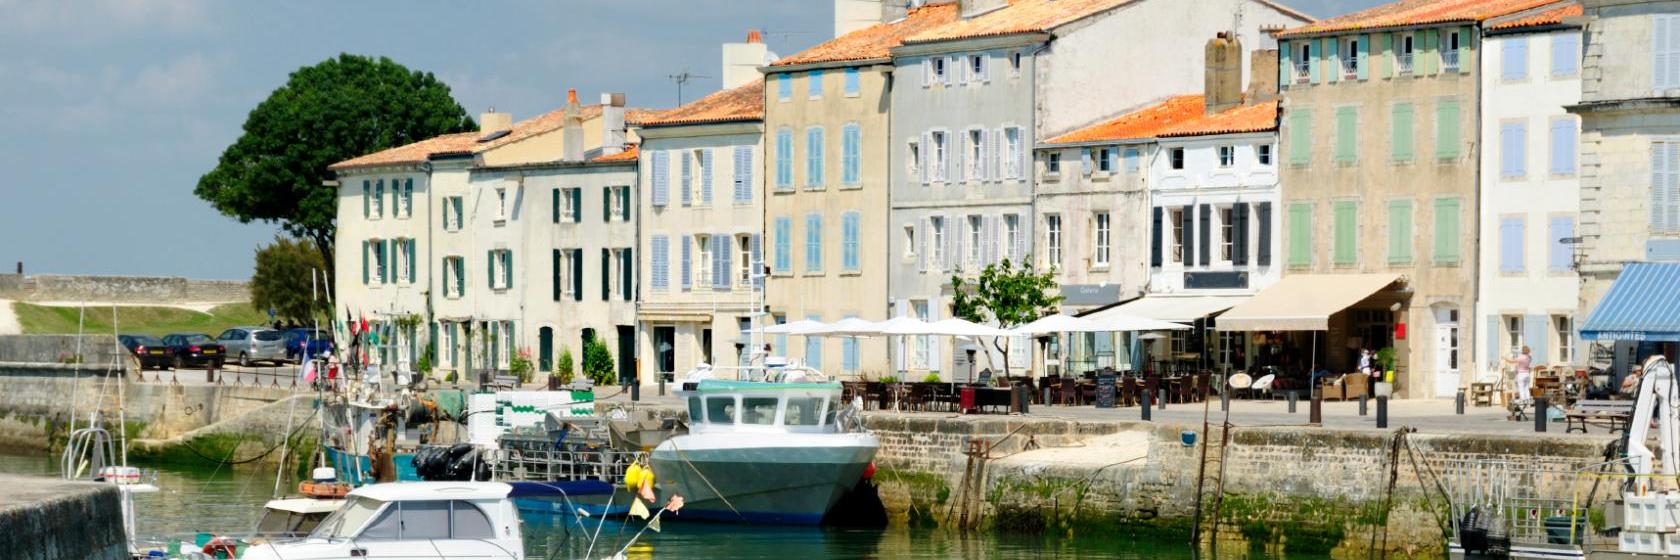 10 Best Saint-Martin-de-Ré Hotels, France (From $72)